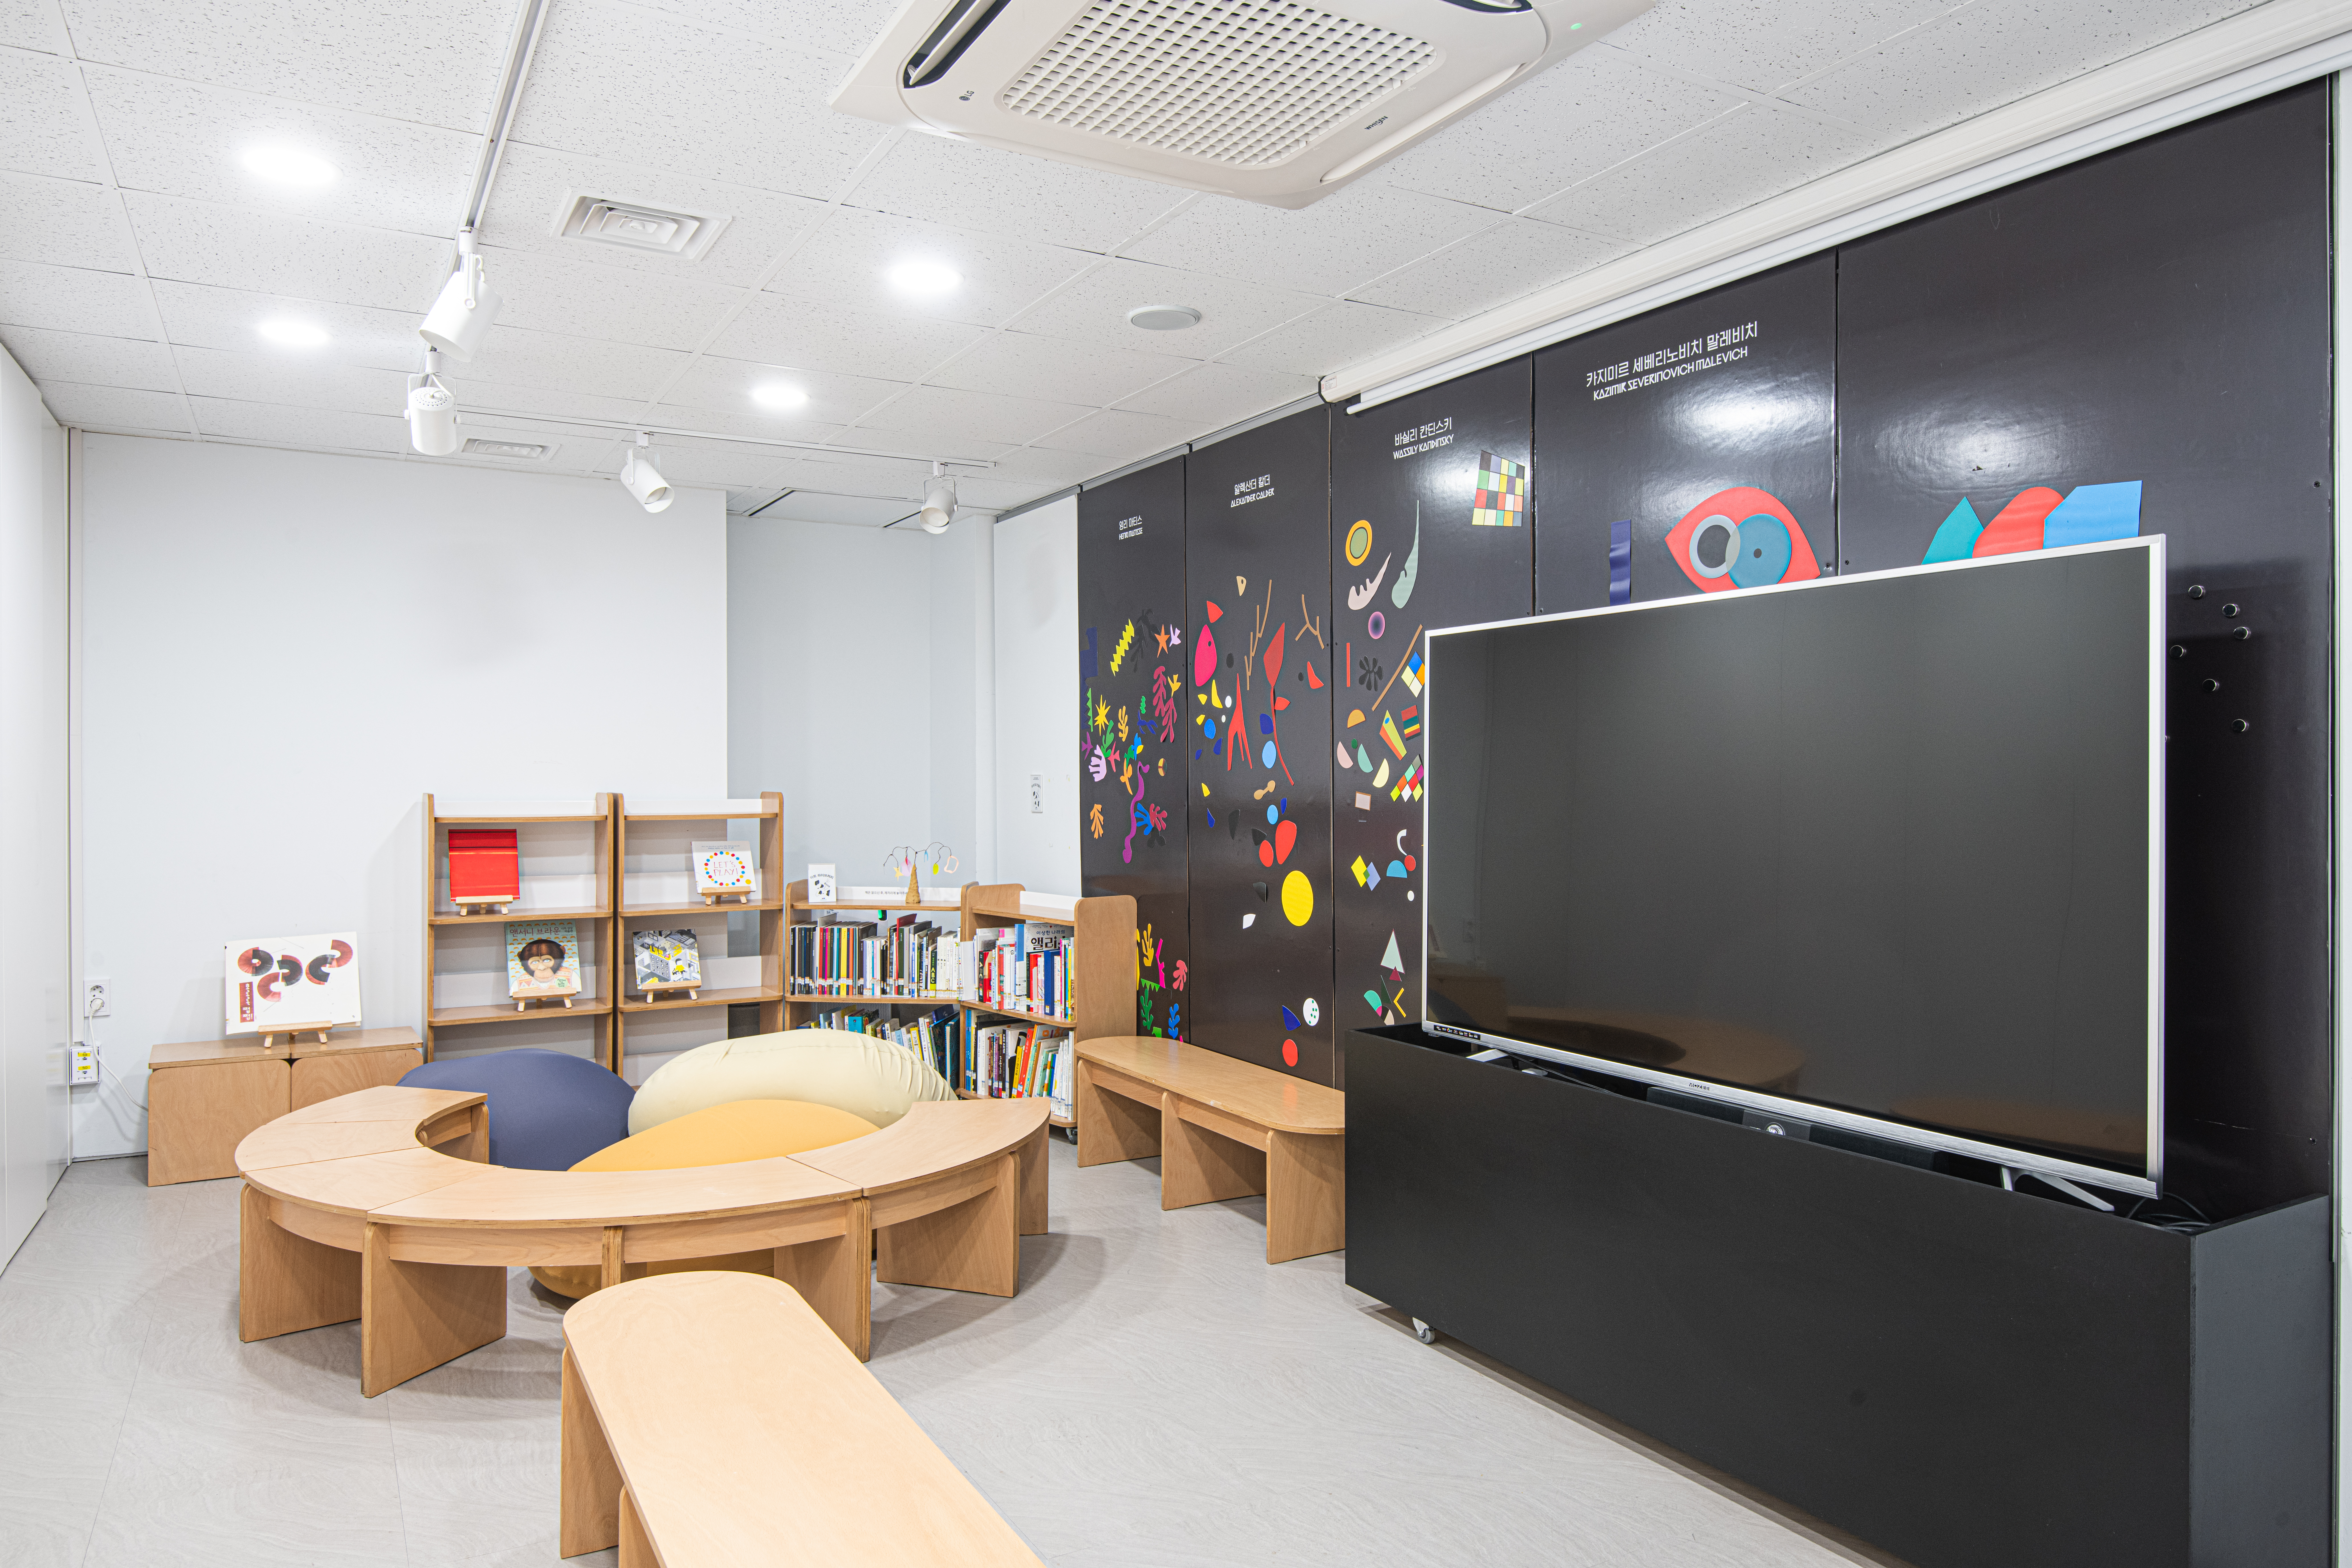 Seongbuk Children’s Museum4 : Interior view of Art Lab in Seongbuk Children’s Museum